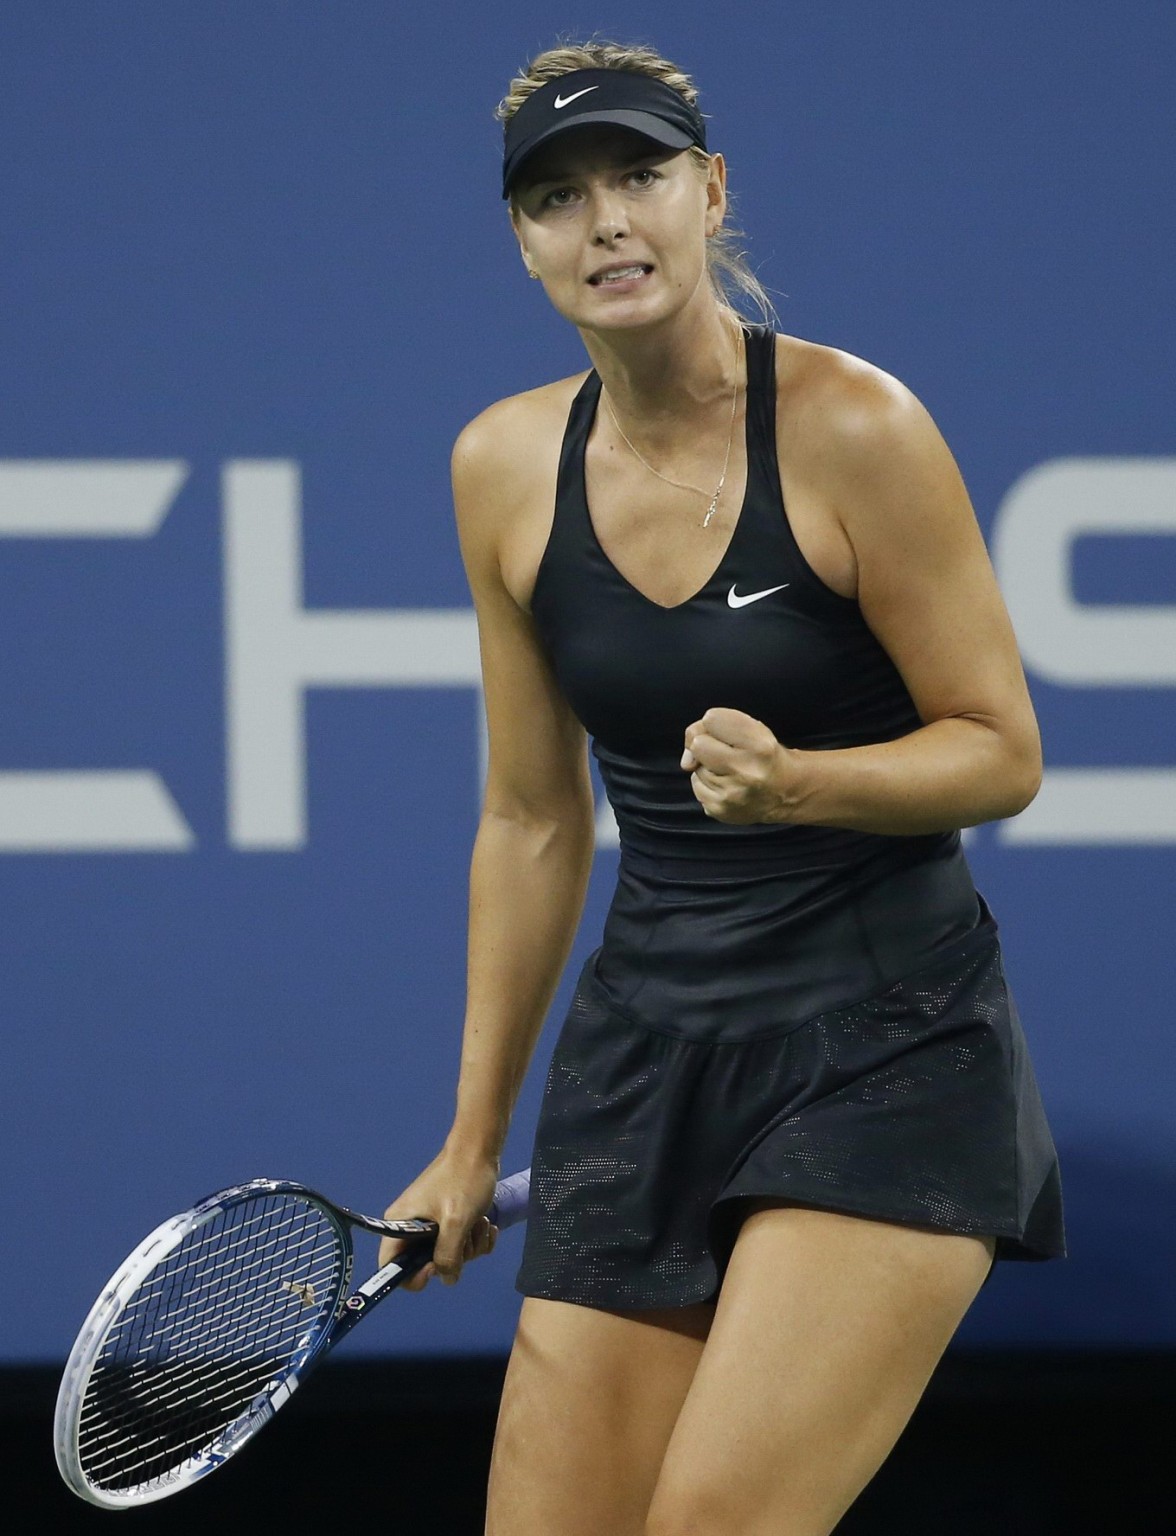 Maria Sharapova upskirt at the US Open in New York #75186978